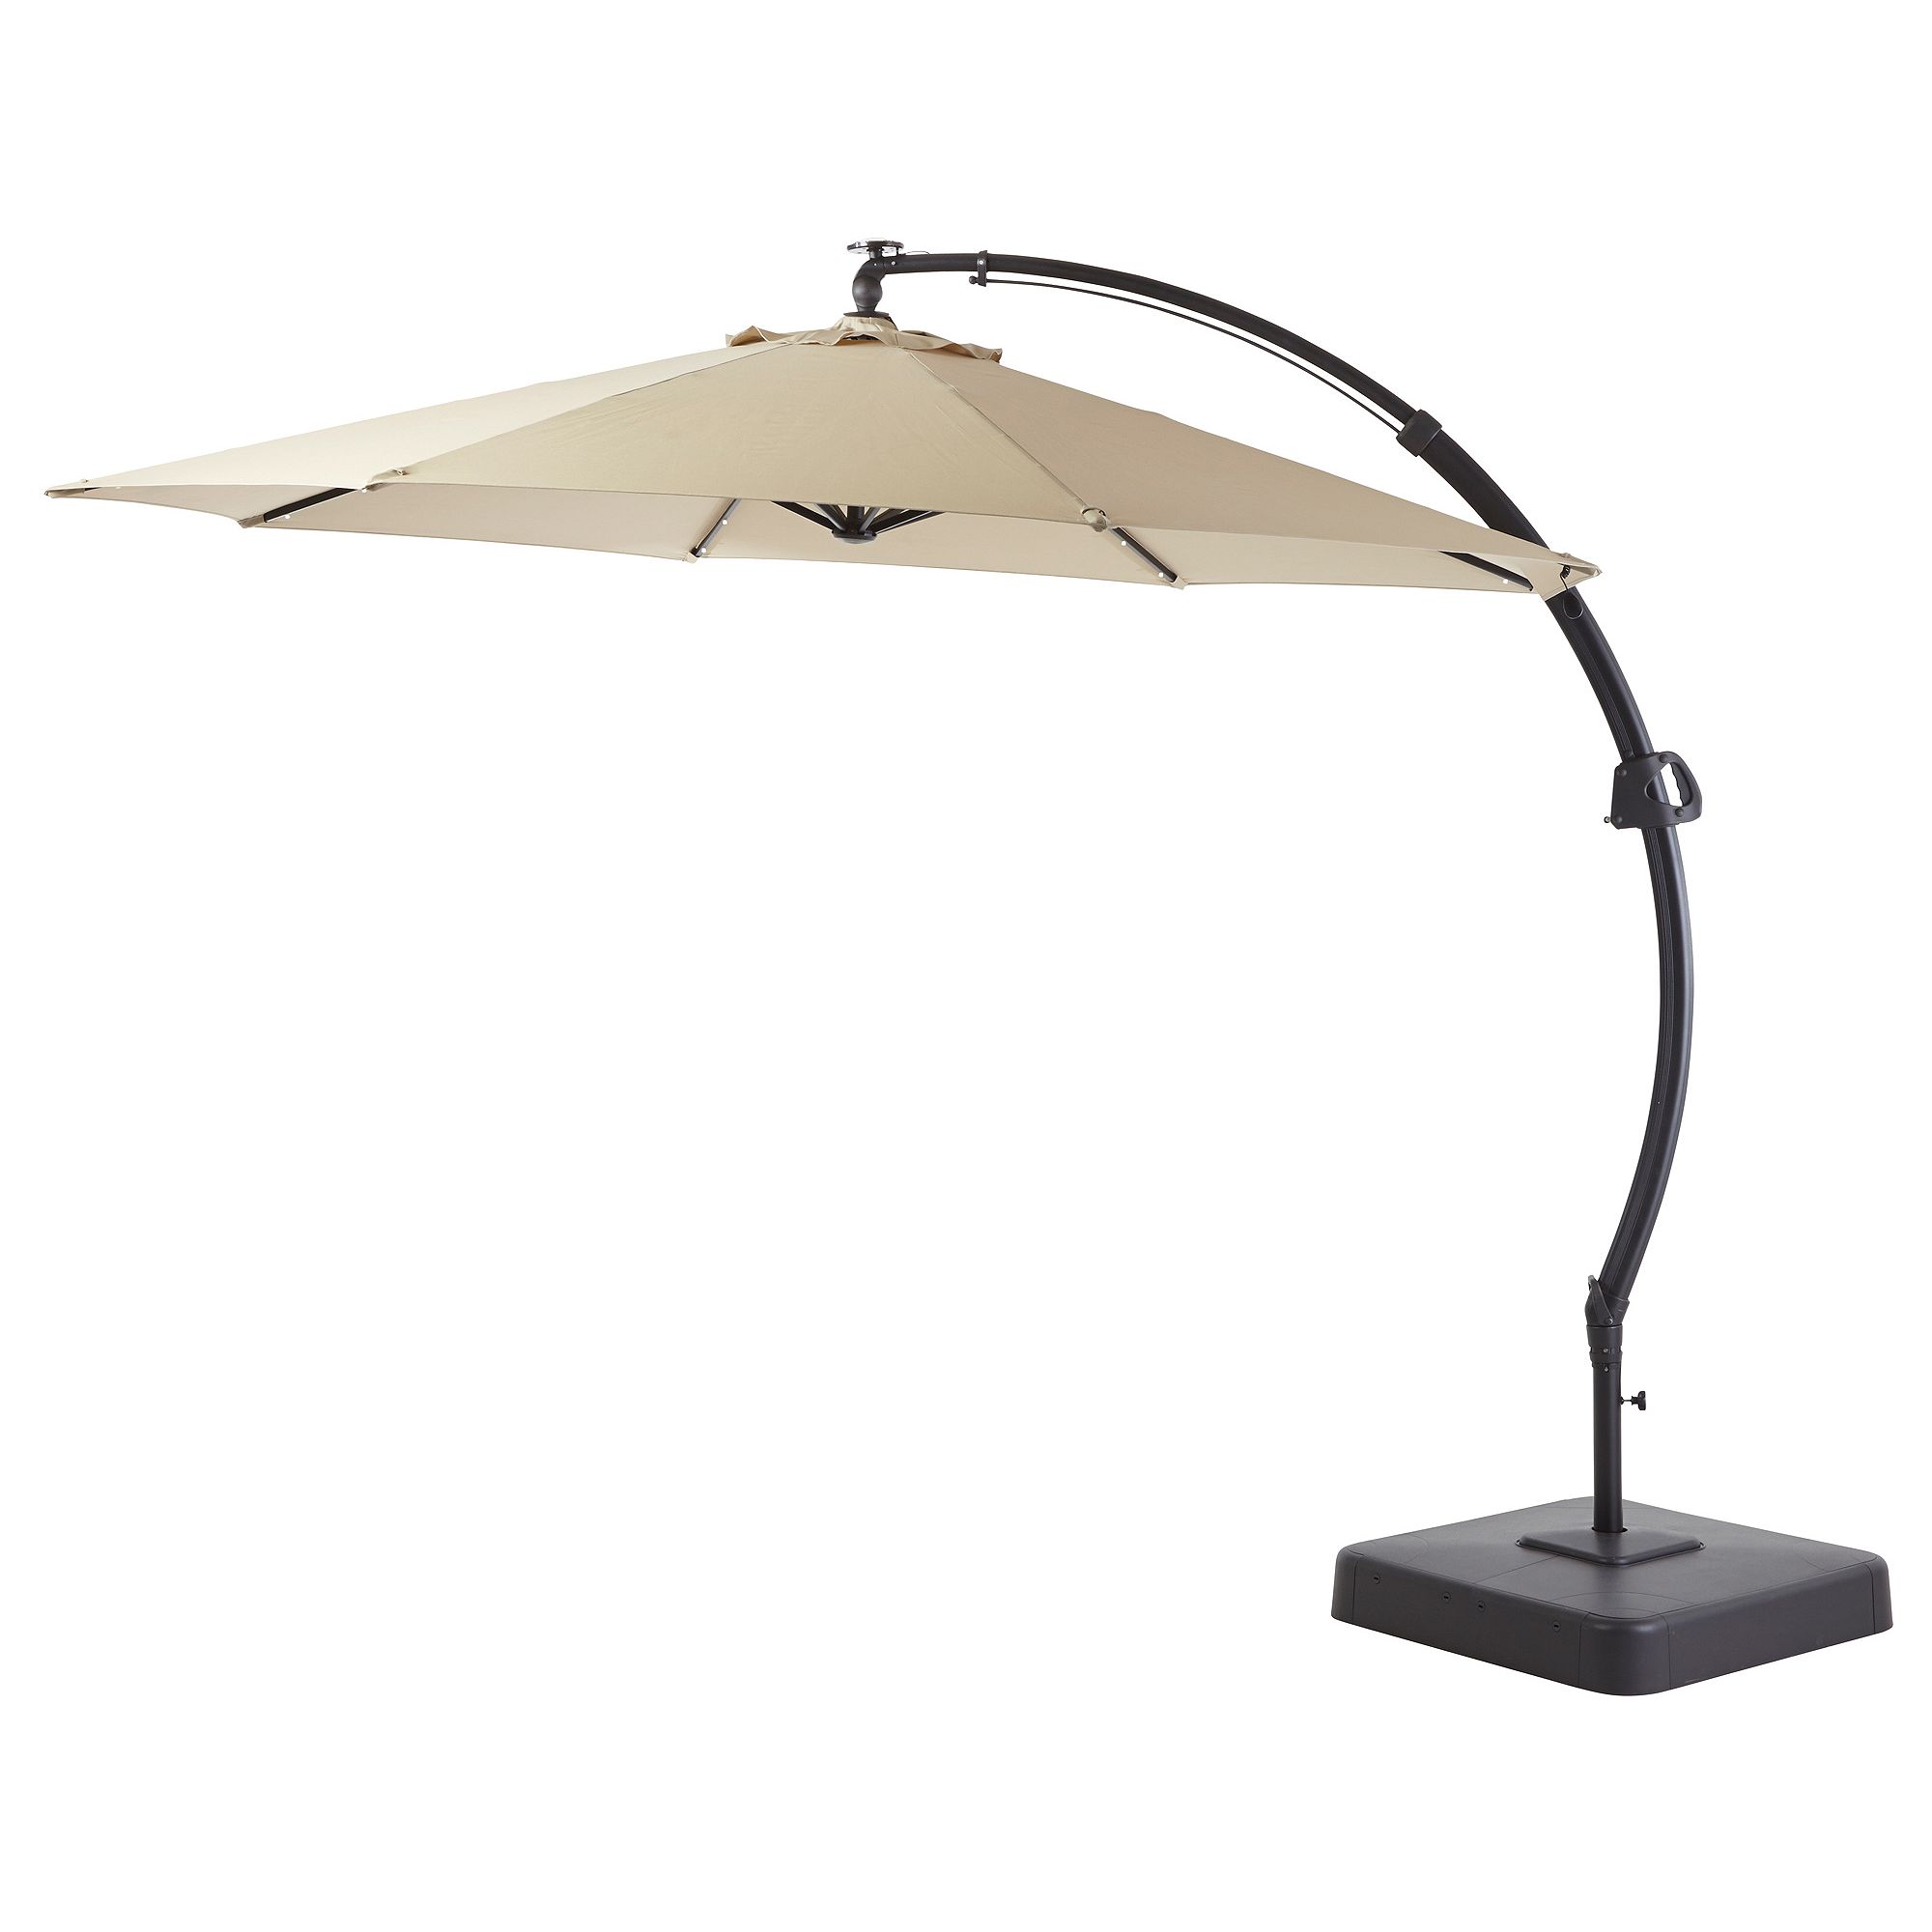 Replacement Canopy for Miramar Offset Umbrella - Riplock 350